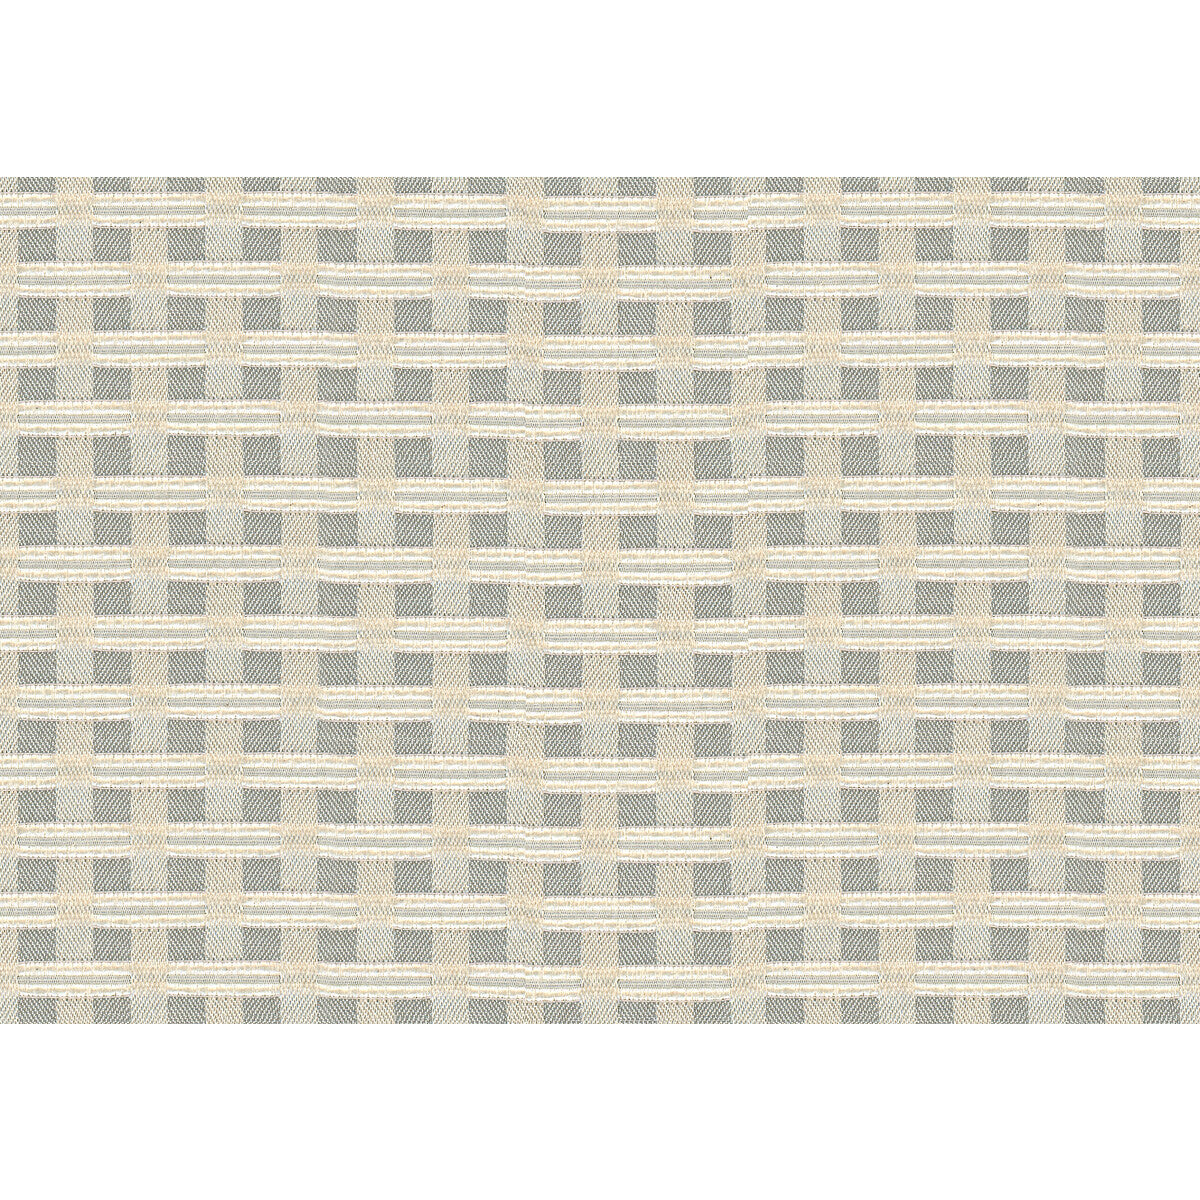 Kravet Smart fabric in 34315-116 color - pattern 34315.116.0 - by Kravet Smart